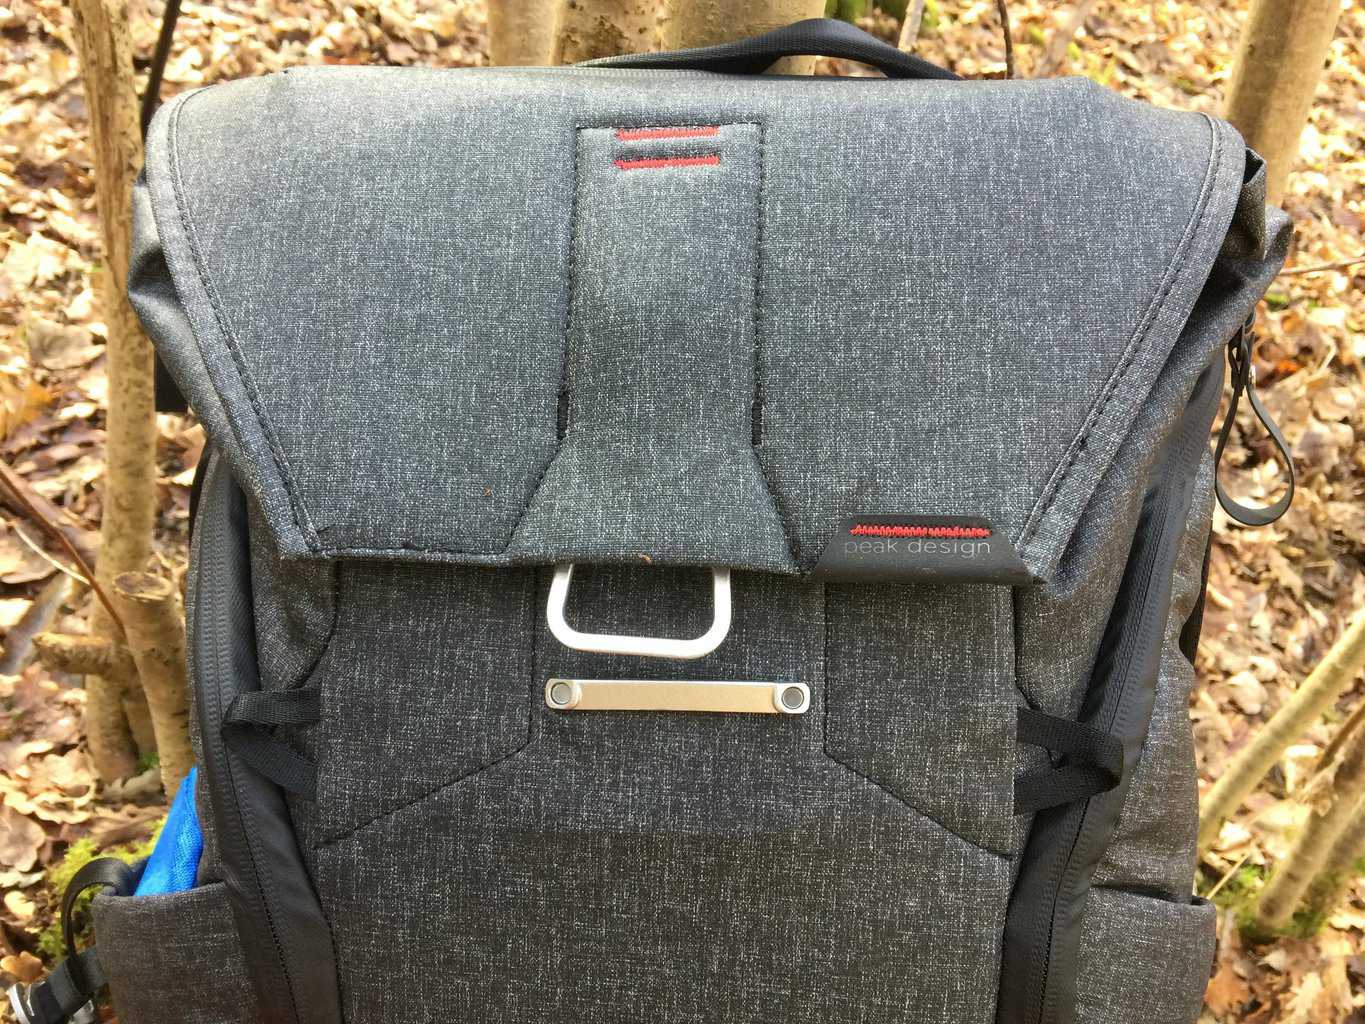  My new camera bag - the Peak Design Everyday Backpack 